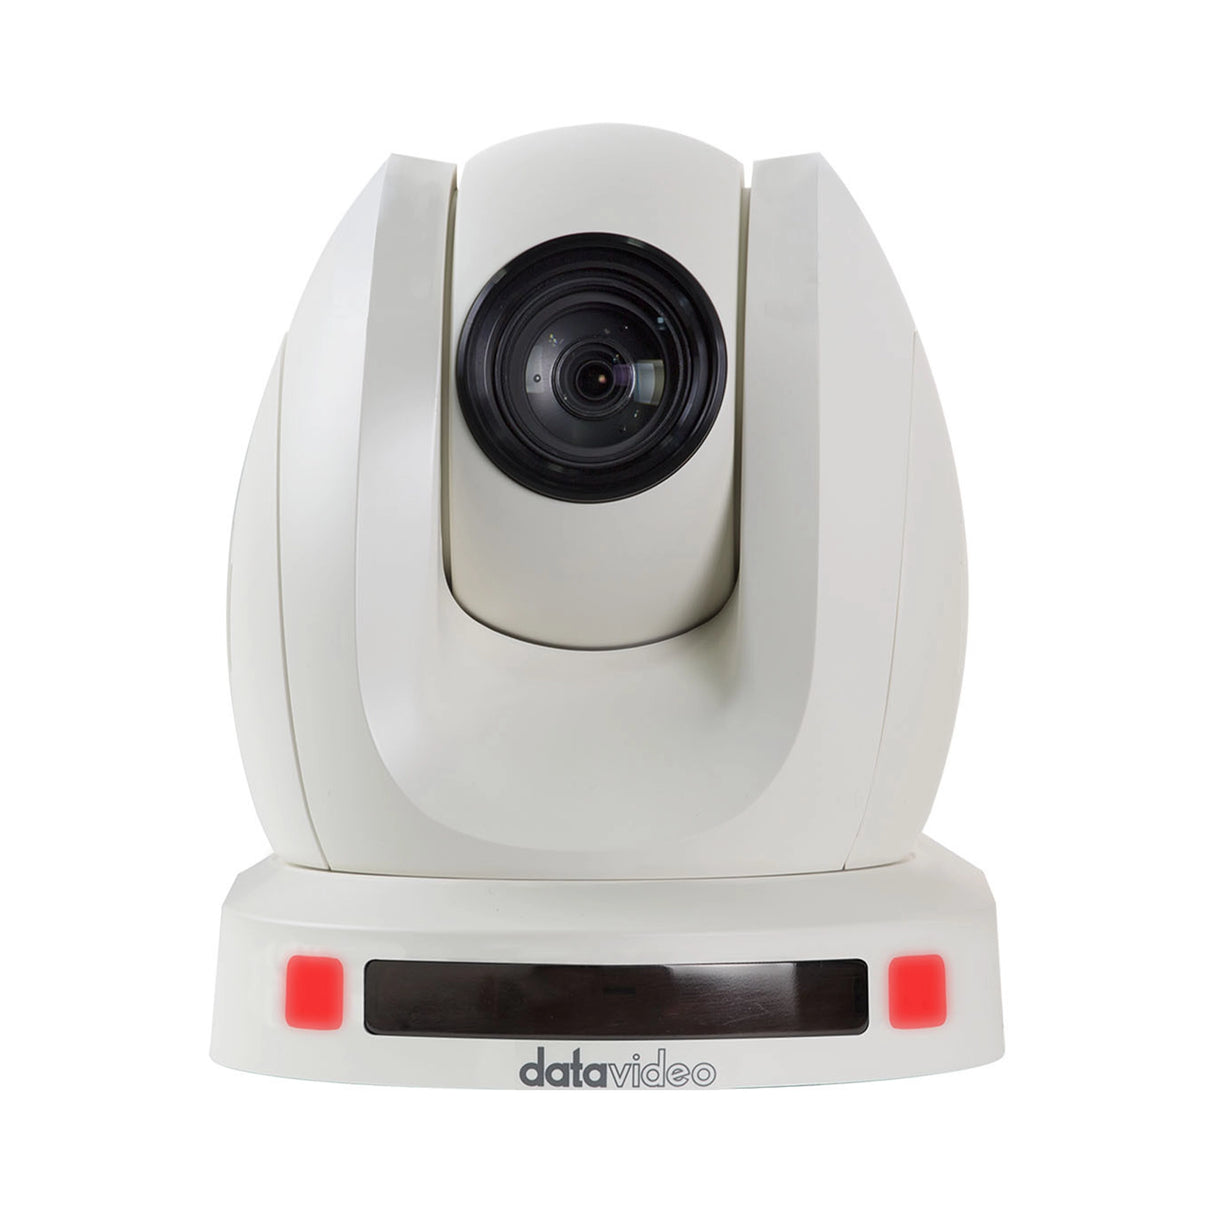 Datavideo PTC-140TW 20x HDBaseT PTZ Camera for HS-1500T or HS-1600T, White